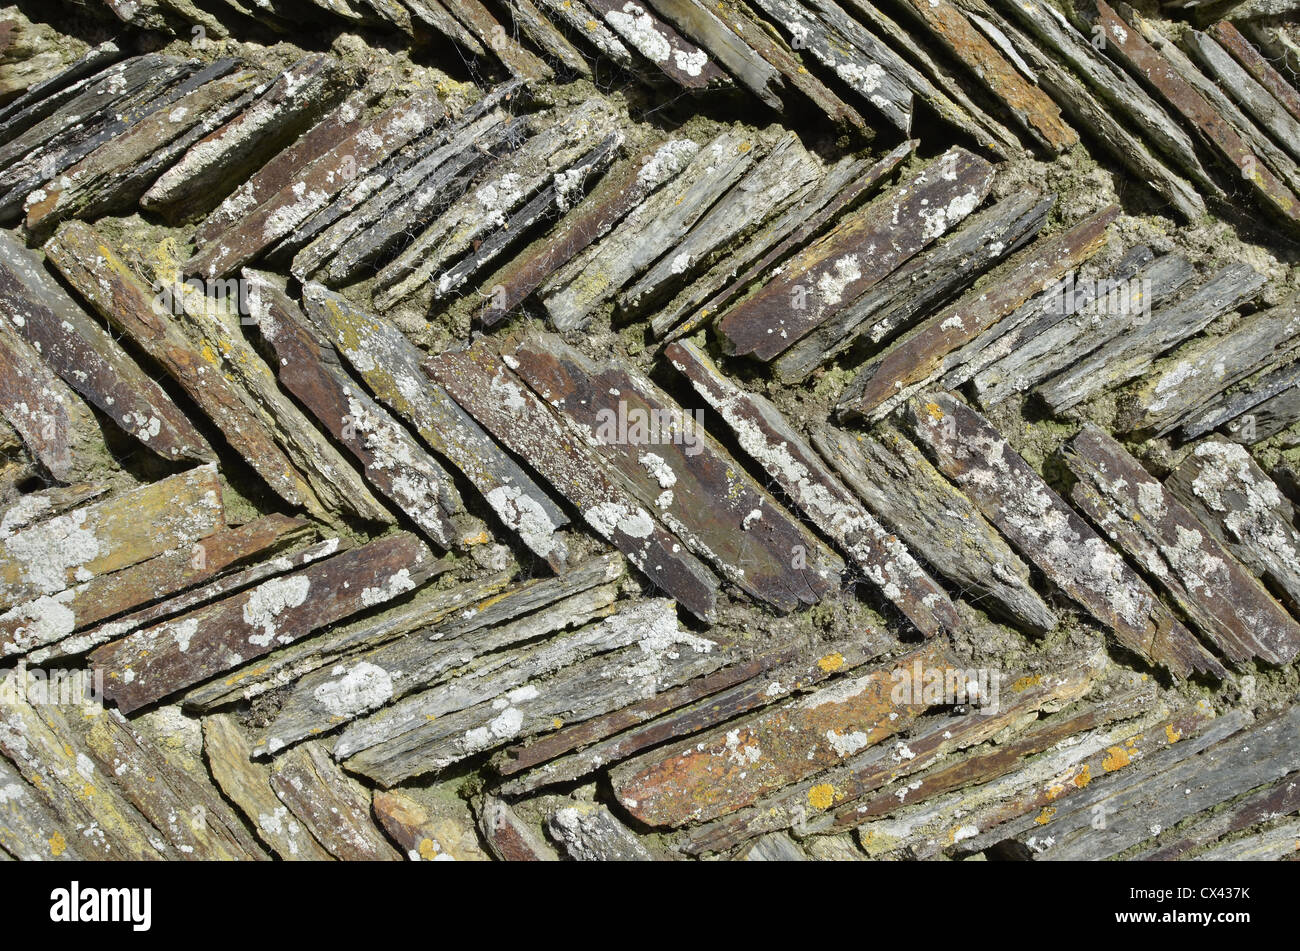 Section of herringbone / zigzag retaining garden wall. Cornwall. Metaphor rigid structure, rigidity, rigid outlook, rigid thinking. Stock Photo